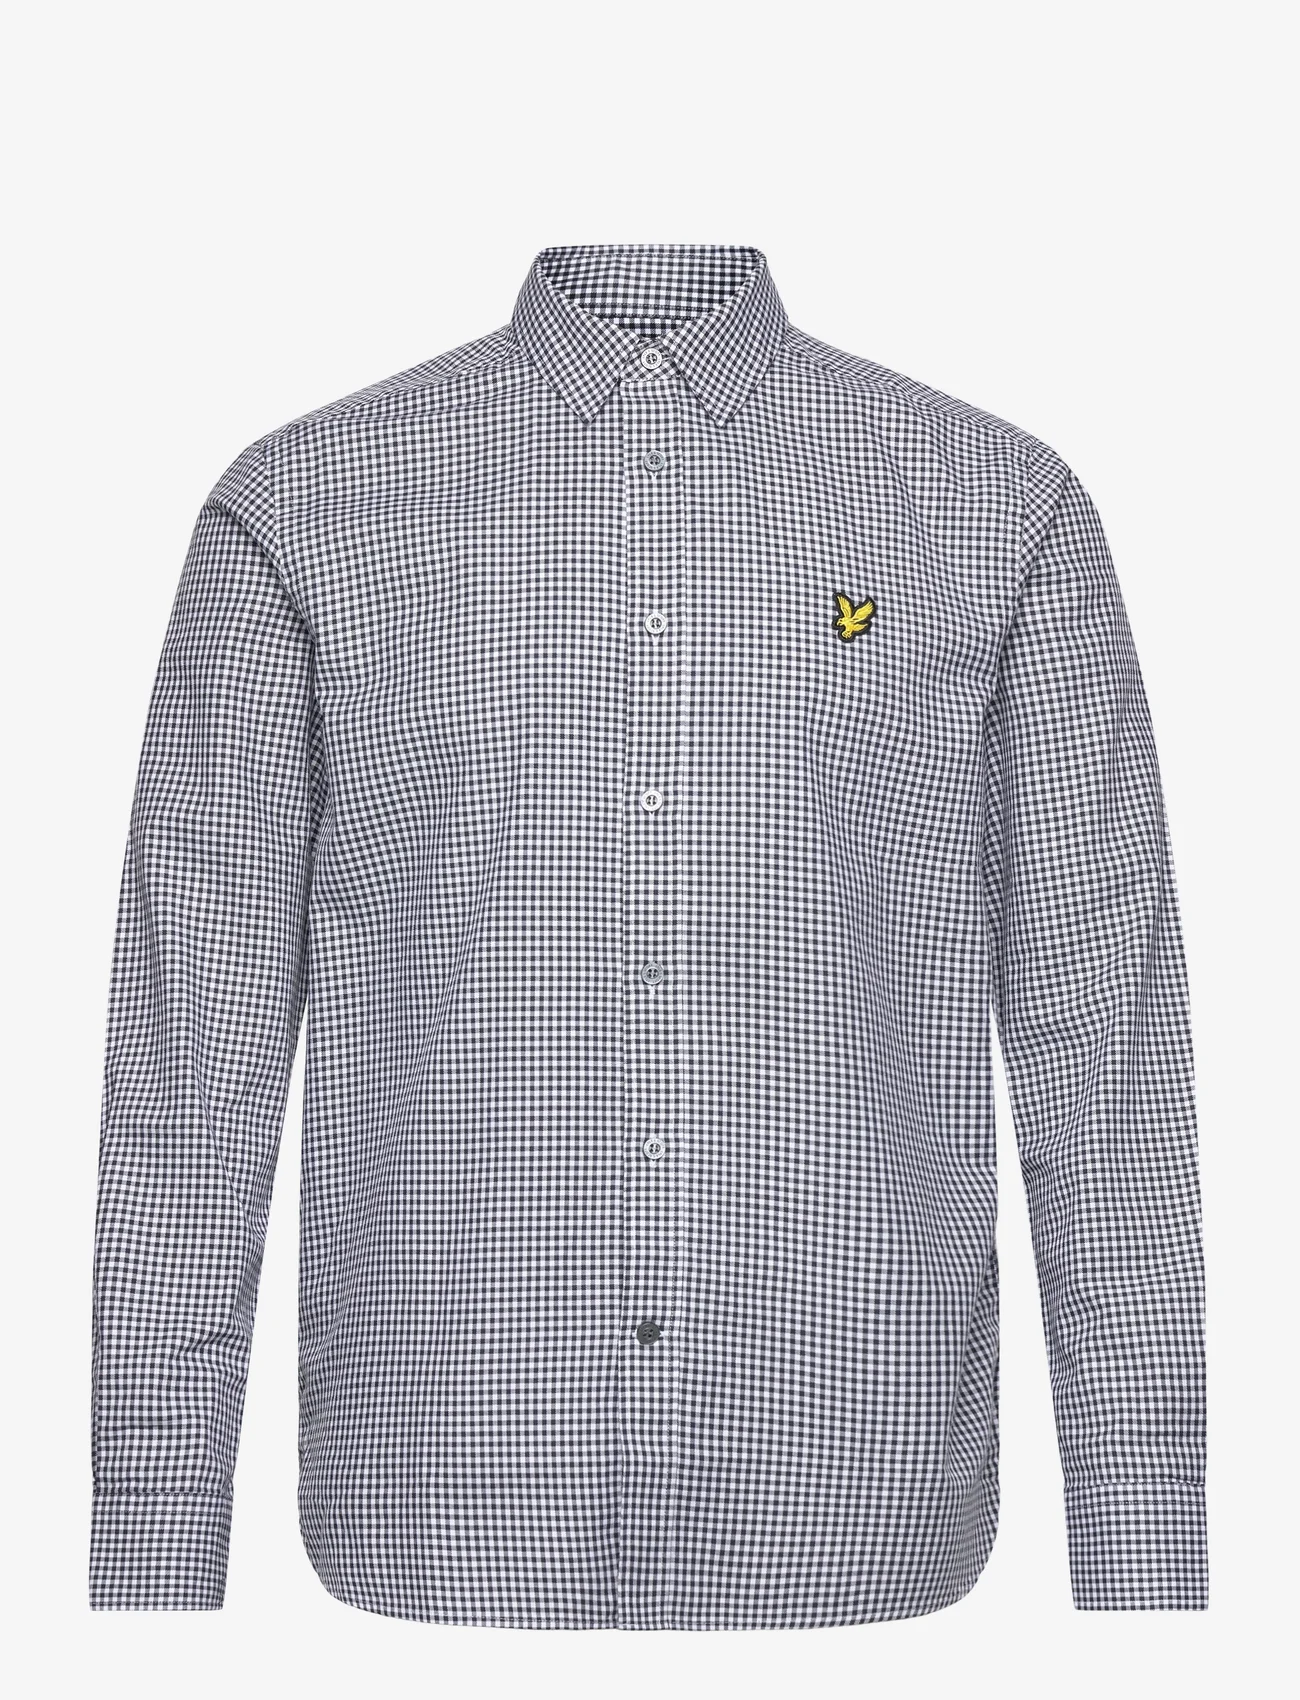 Lyle & Scott - Shepherd Check Shirt - casual overhemden - w403 dark navy/ white - 0